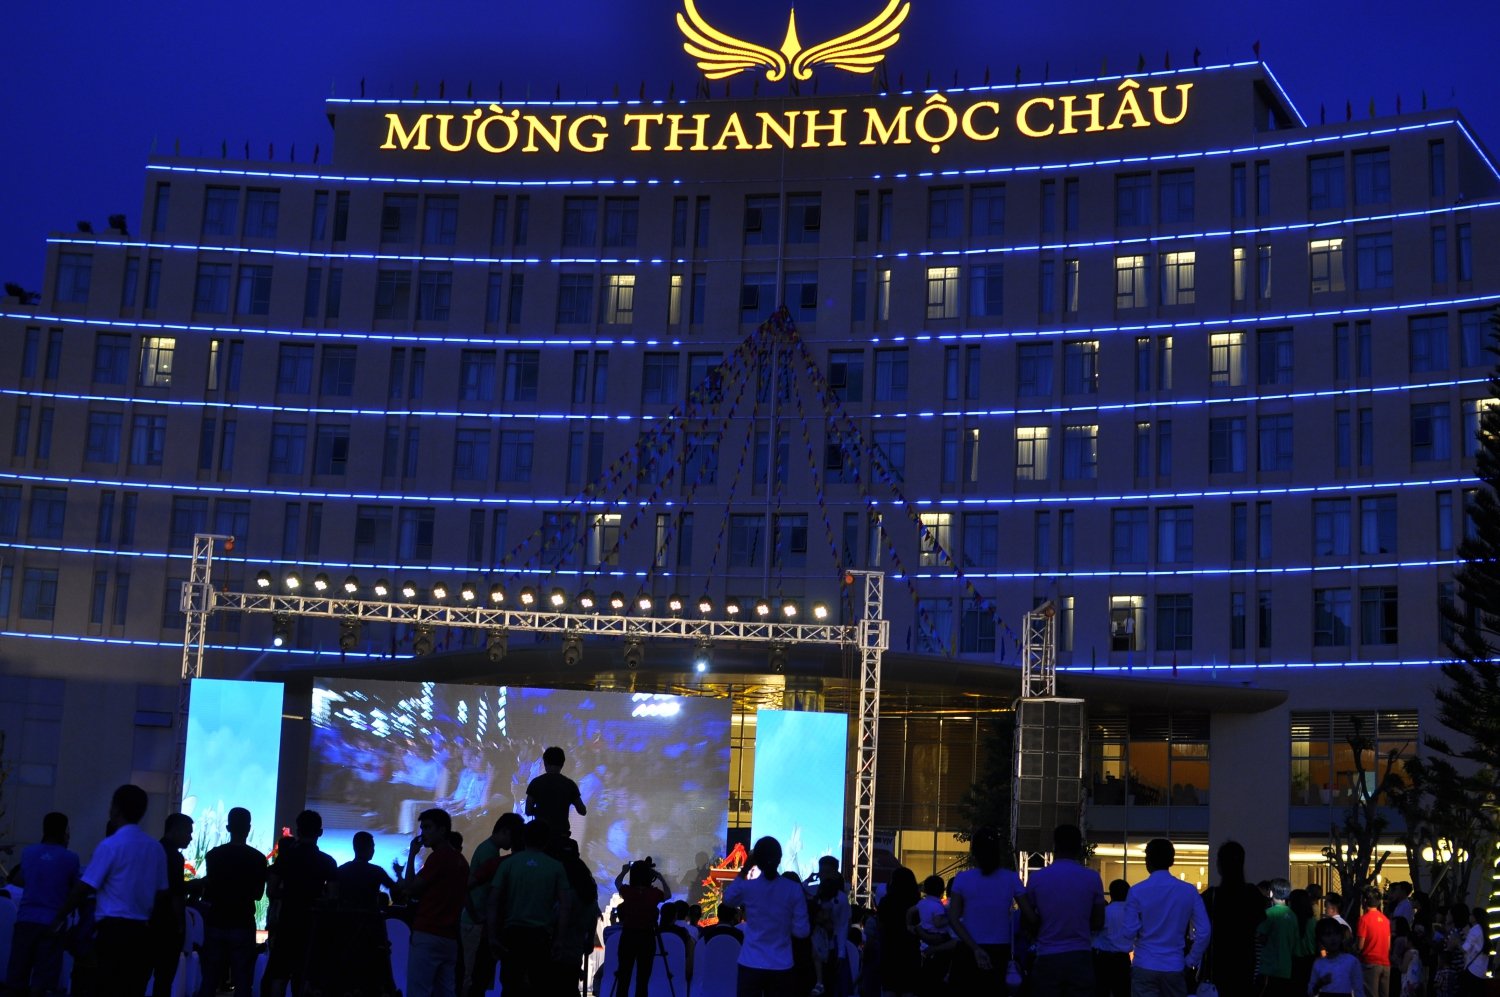 Muong Thanh Moc Chau